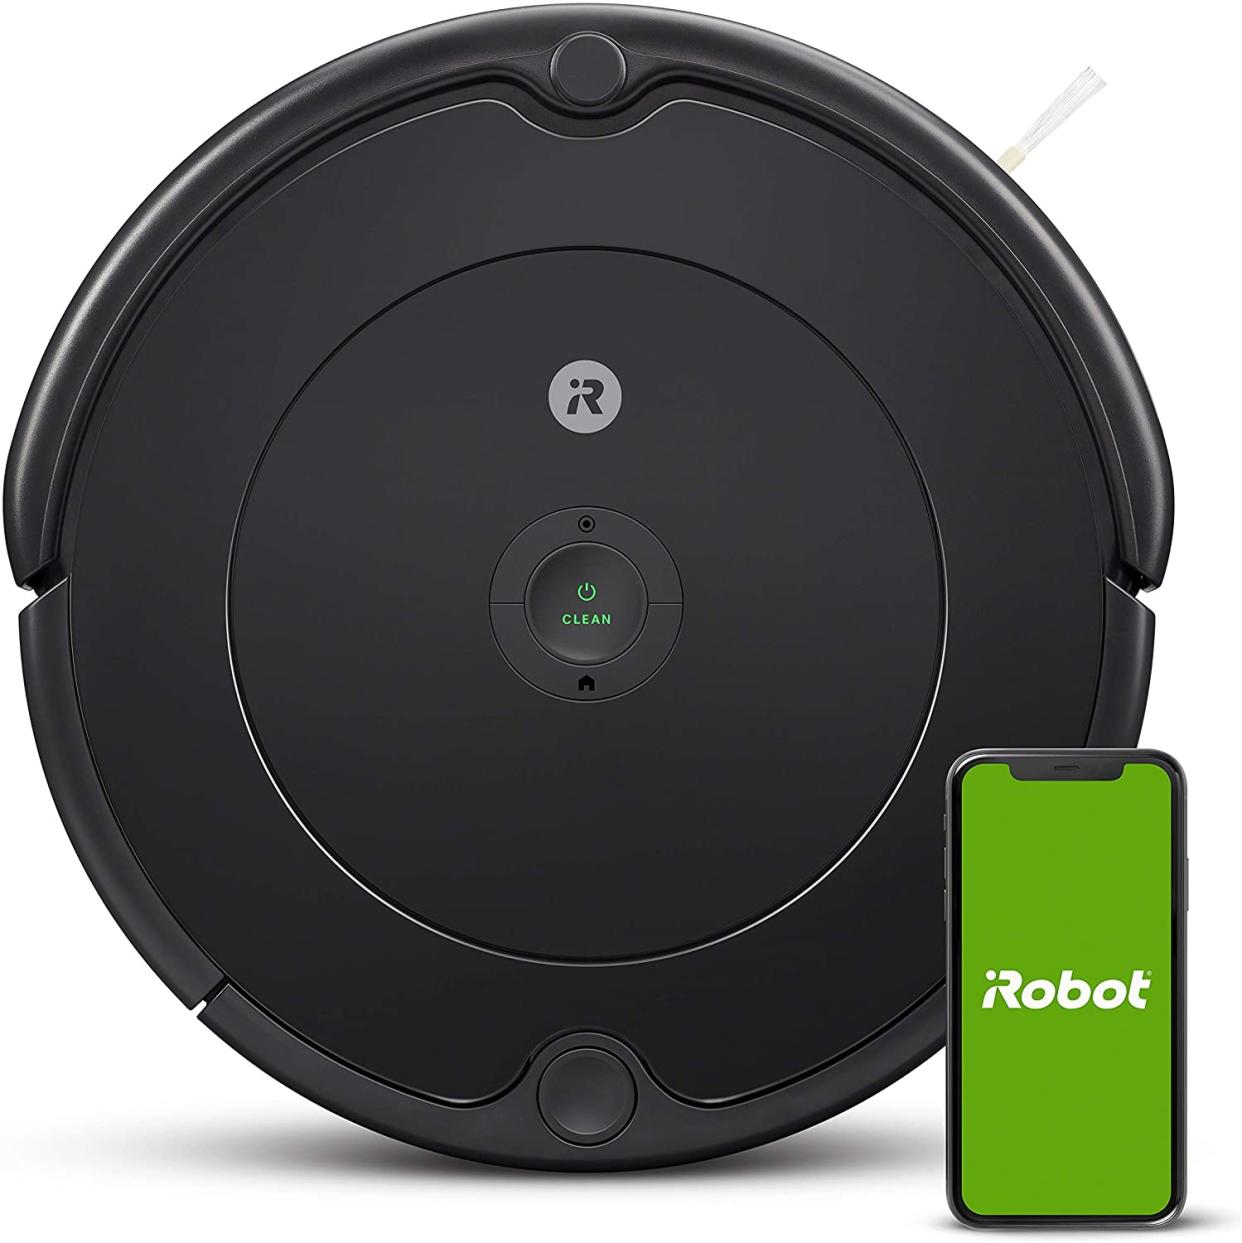 prime day deals, iRobot roomba vacuum